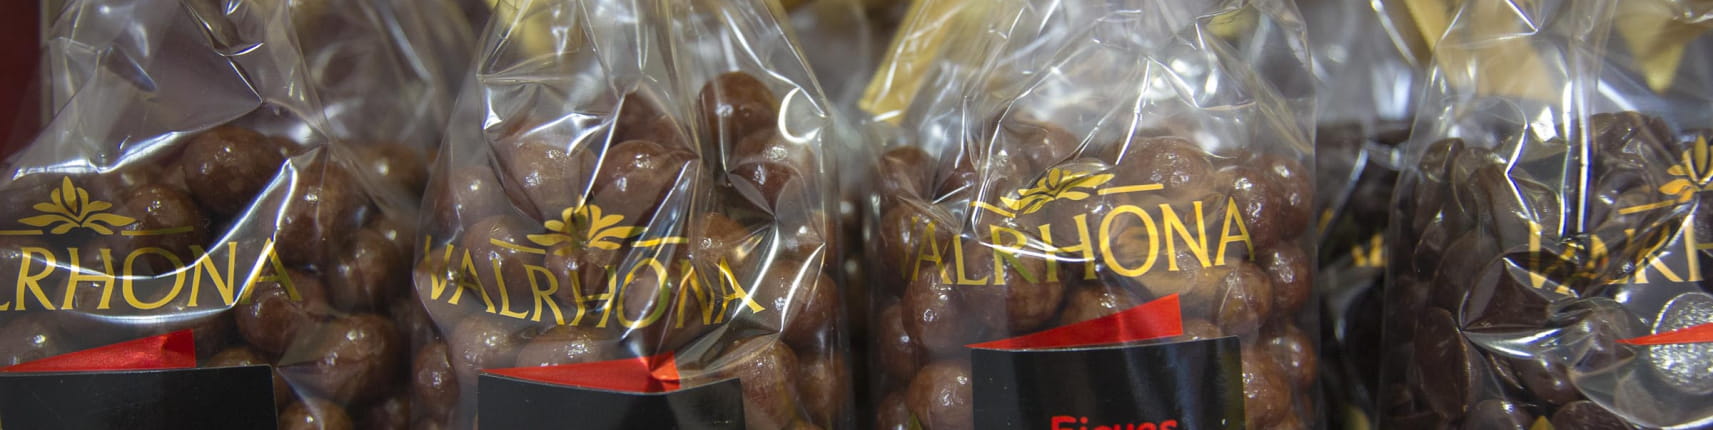 paquet de bonons en chocolat Valrhona